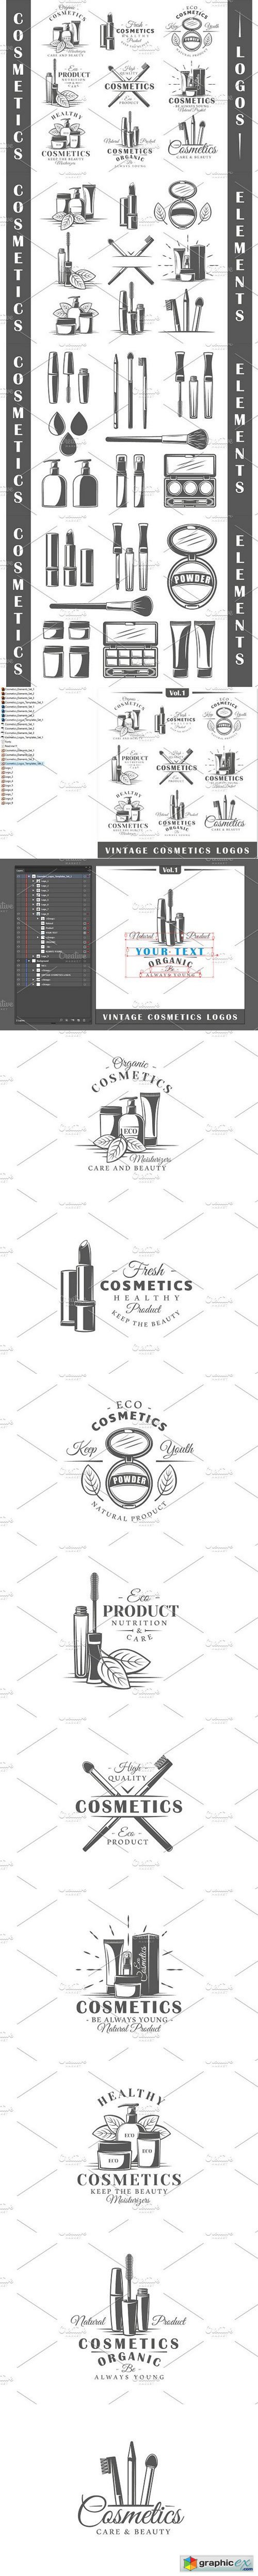 9 Cosmetics Logos Templates Vol.1